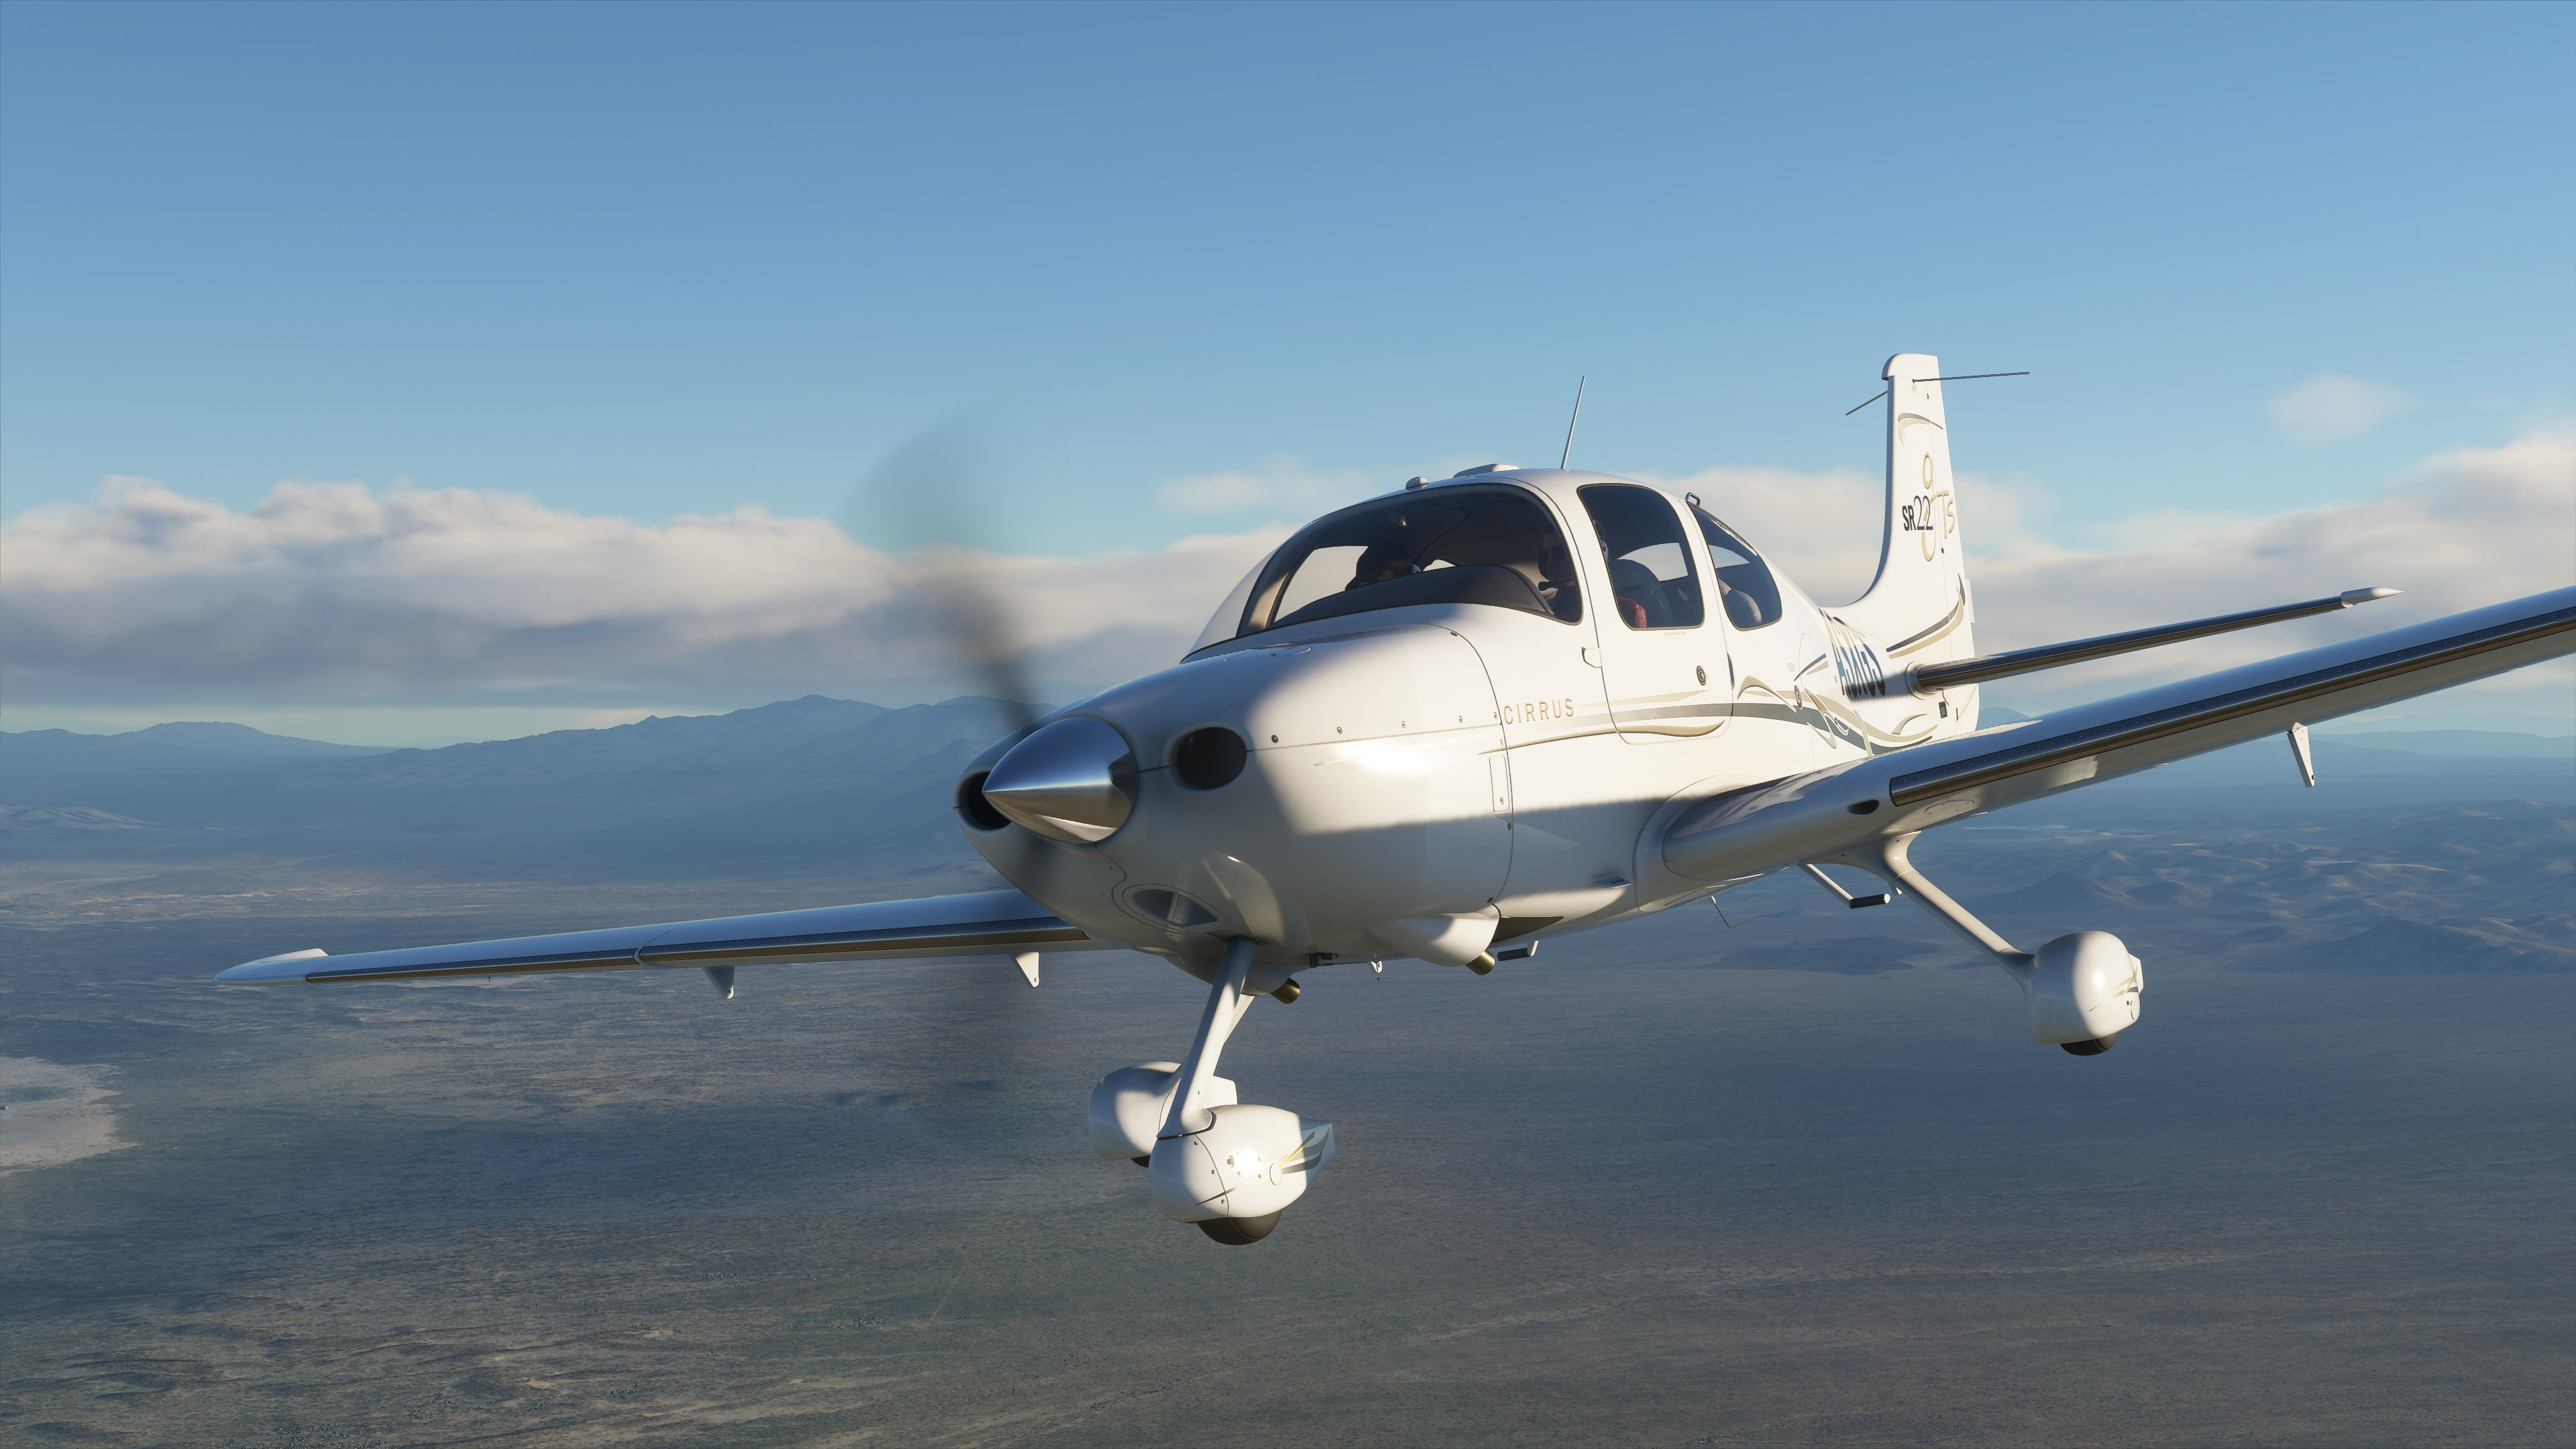 Microsoft Flight Simulator Premium Deluxe 40Th Anniversary Edition on XOne  — price history, screenshots, discounts • USA